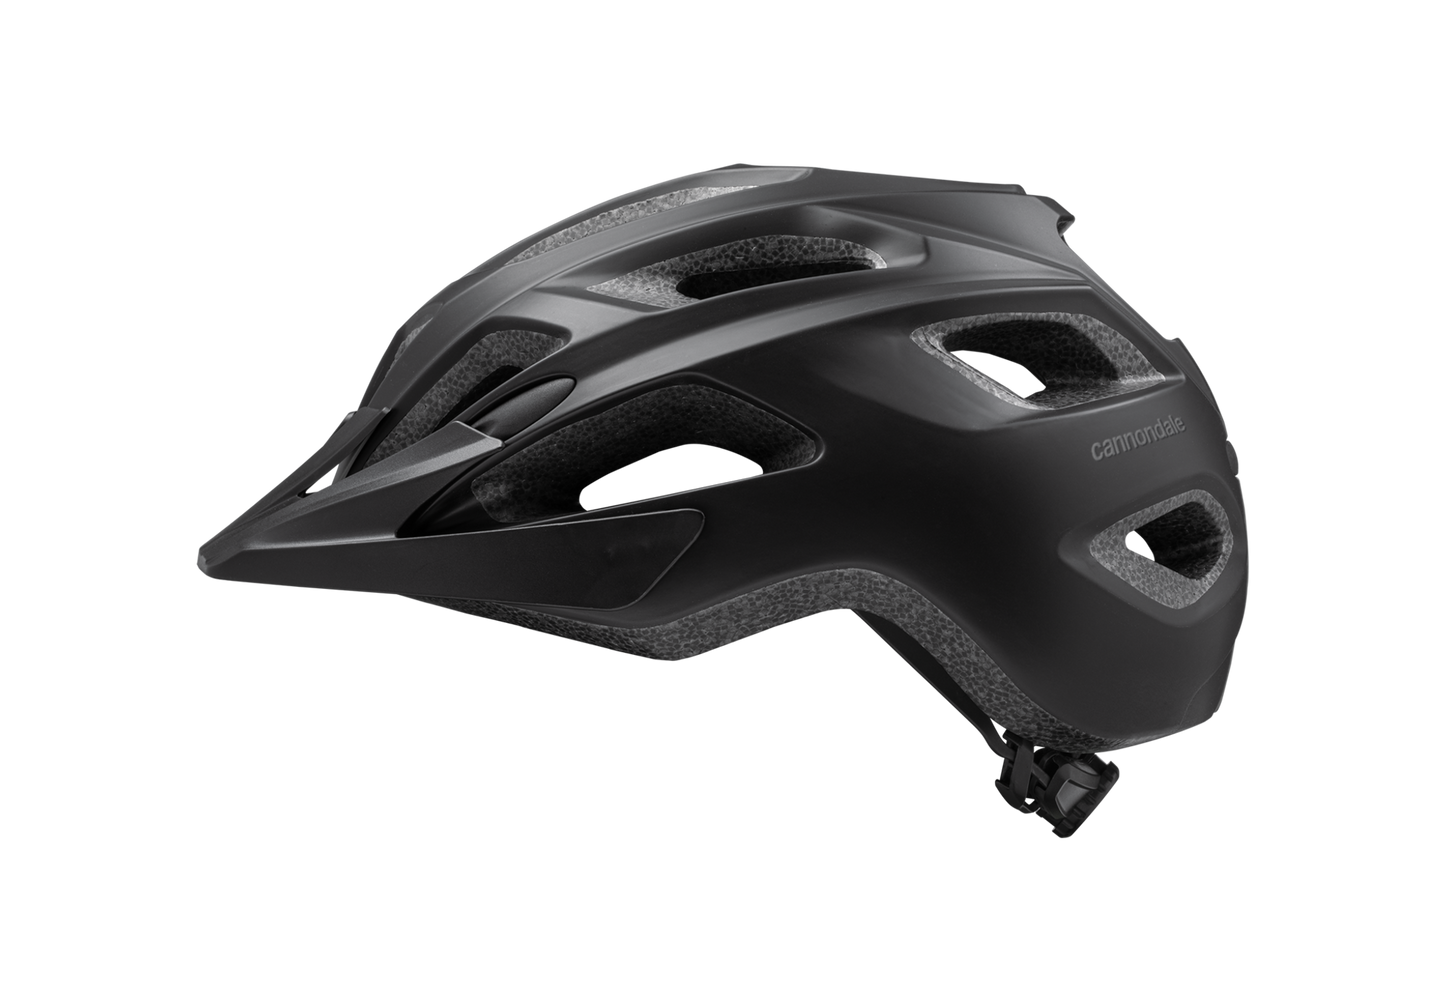 Cannondale Adult Trail Helmet